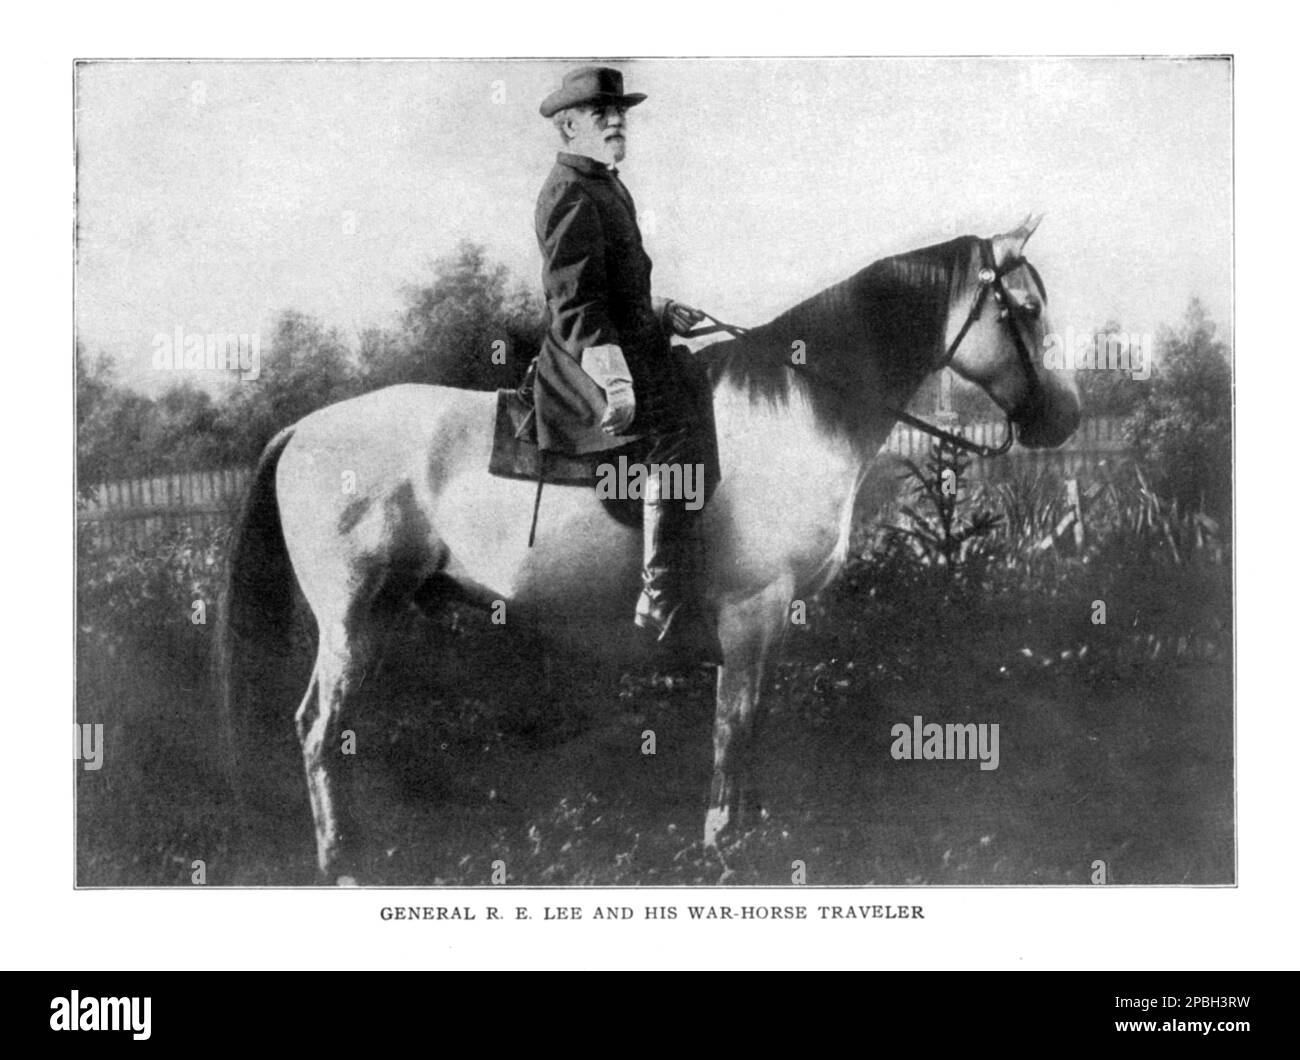 The  General ROBERT E. LEE  ( 1807 - 1870 ) of Confederate Army , in this photo with preferered war-horse Traveller   . Lee was a career United States Army officer, an engineer, and among the most celebrated generals in American history. - SECESSION WAR  CIVIL - GUERRA CIVILE DI SECESSIONE AMERICANA  - cappello - hat -  Circus - uomo anziano vecchio - older man  - barba bianca - white beard  - profilo - profile - tie bow - papillon - cravatta -  - USA  - top hat - cappello a cilindro - SUDISTA CONFEDERATO - CONFEDERATE ----  Archivio GBB Stock Photo